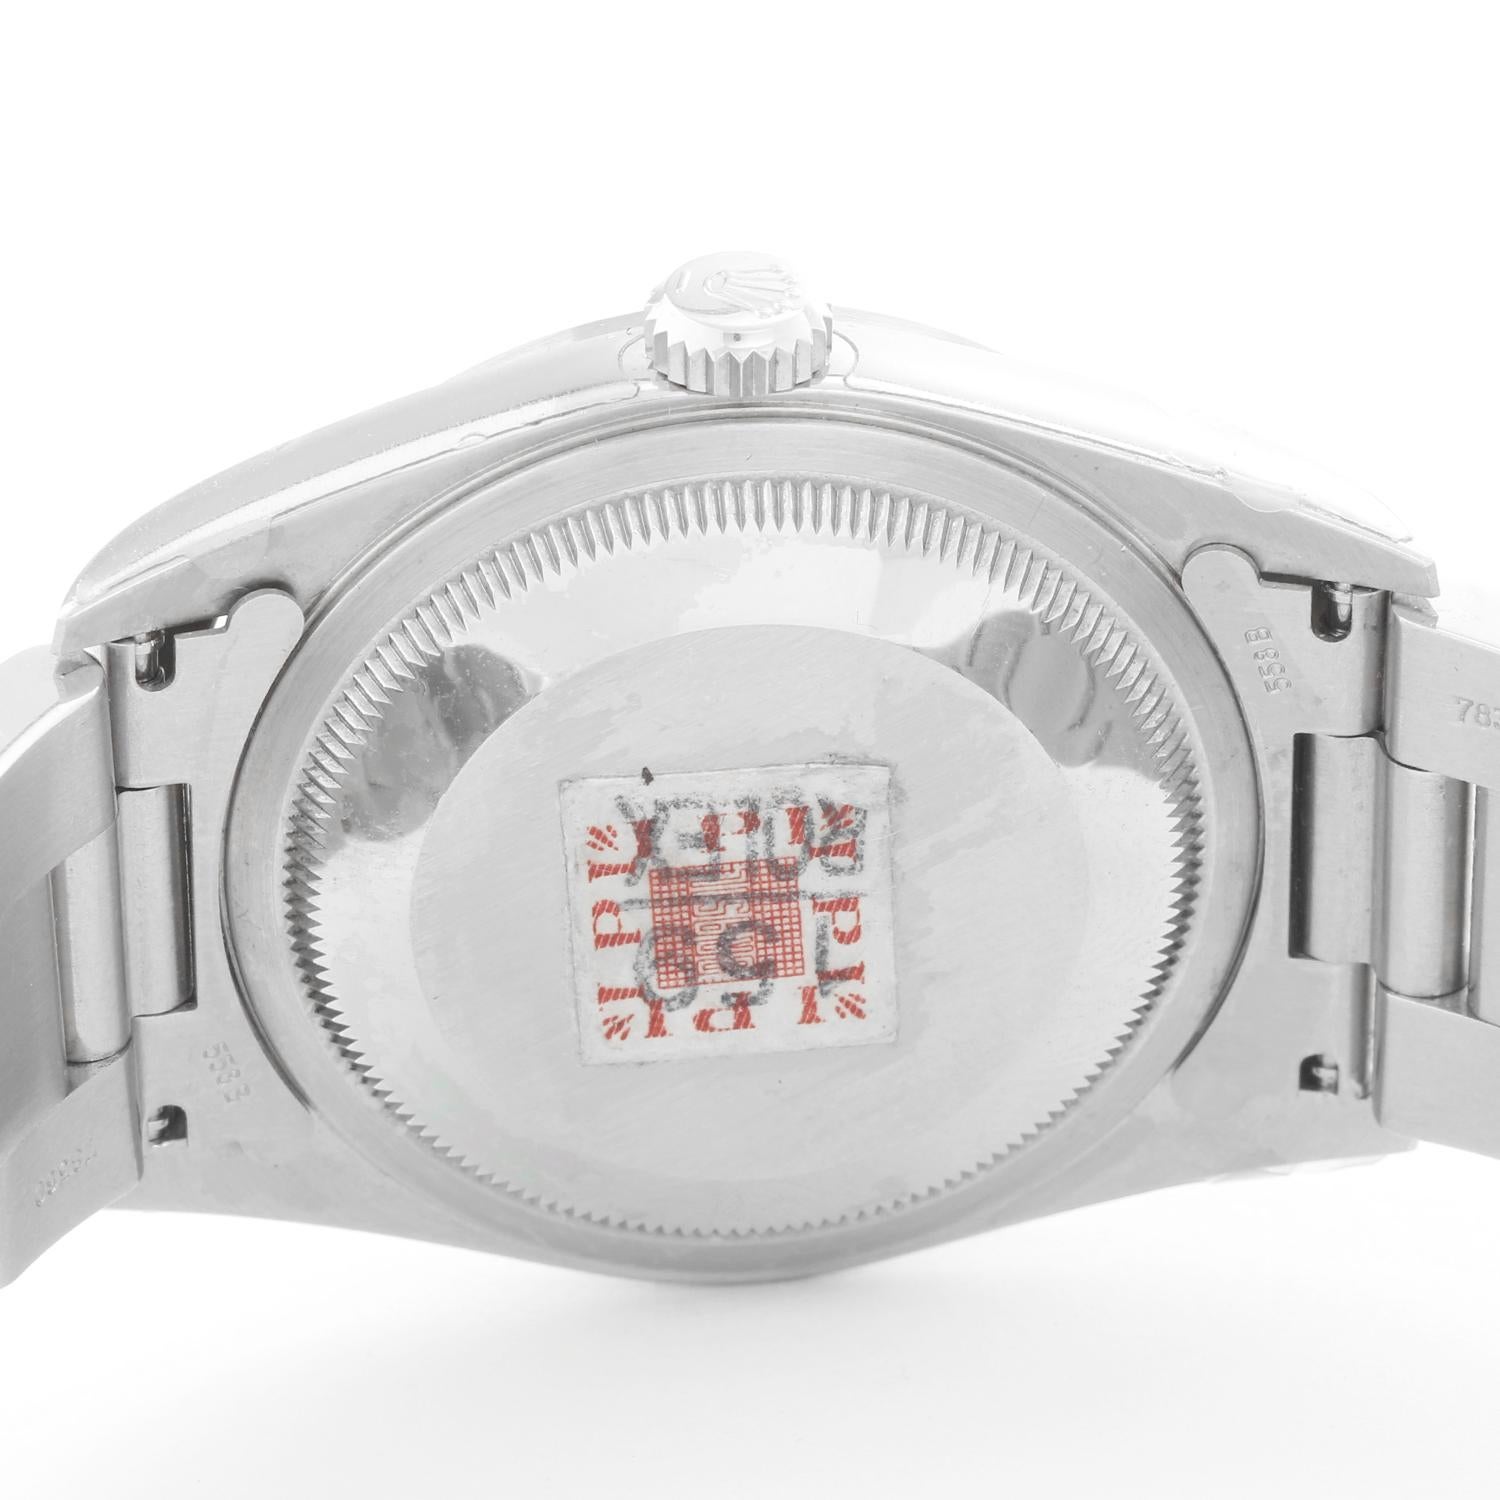 Collectors Edition Rolex Datejust Men's Stainless Steel Watch 16200 1